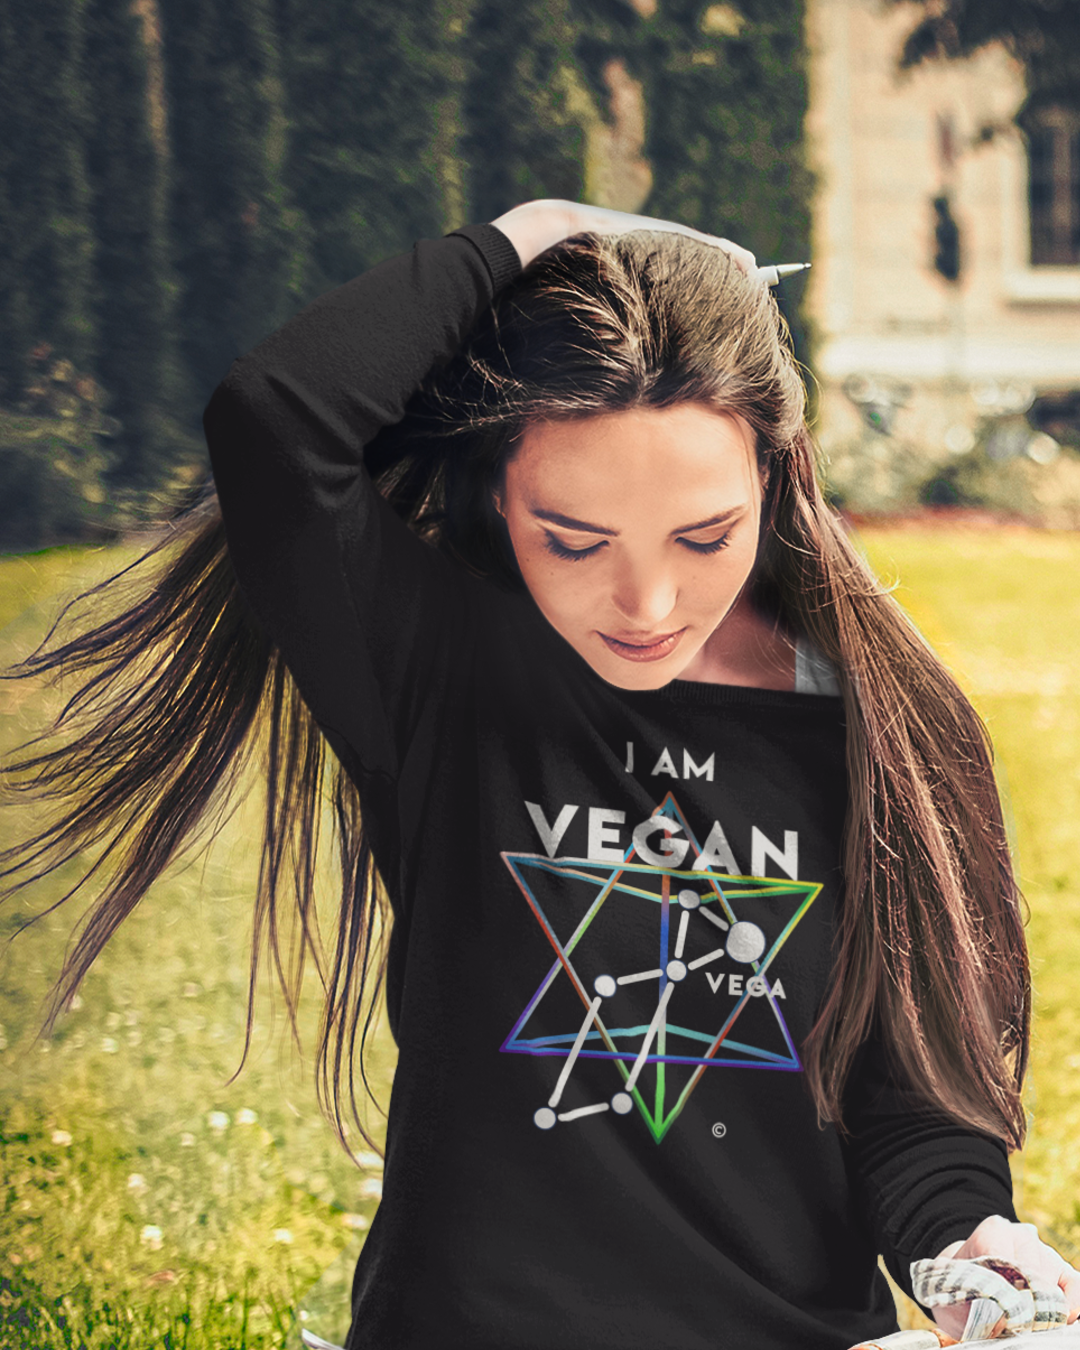 The Vega Collection: Unisex Drop Shoulder Sweatshirt